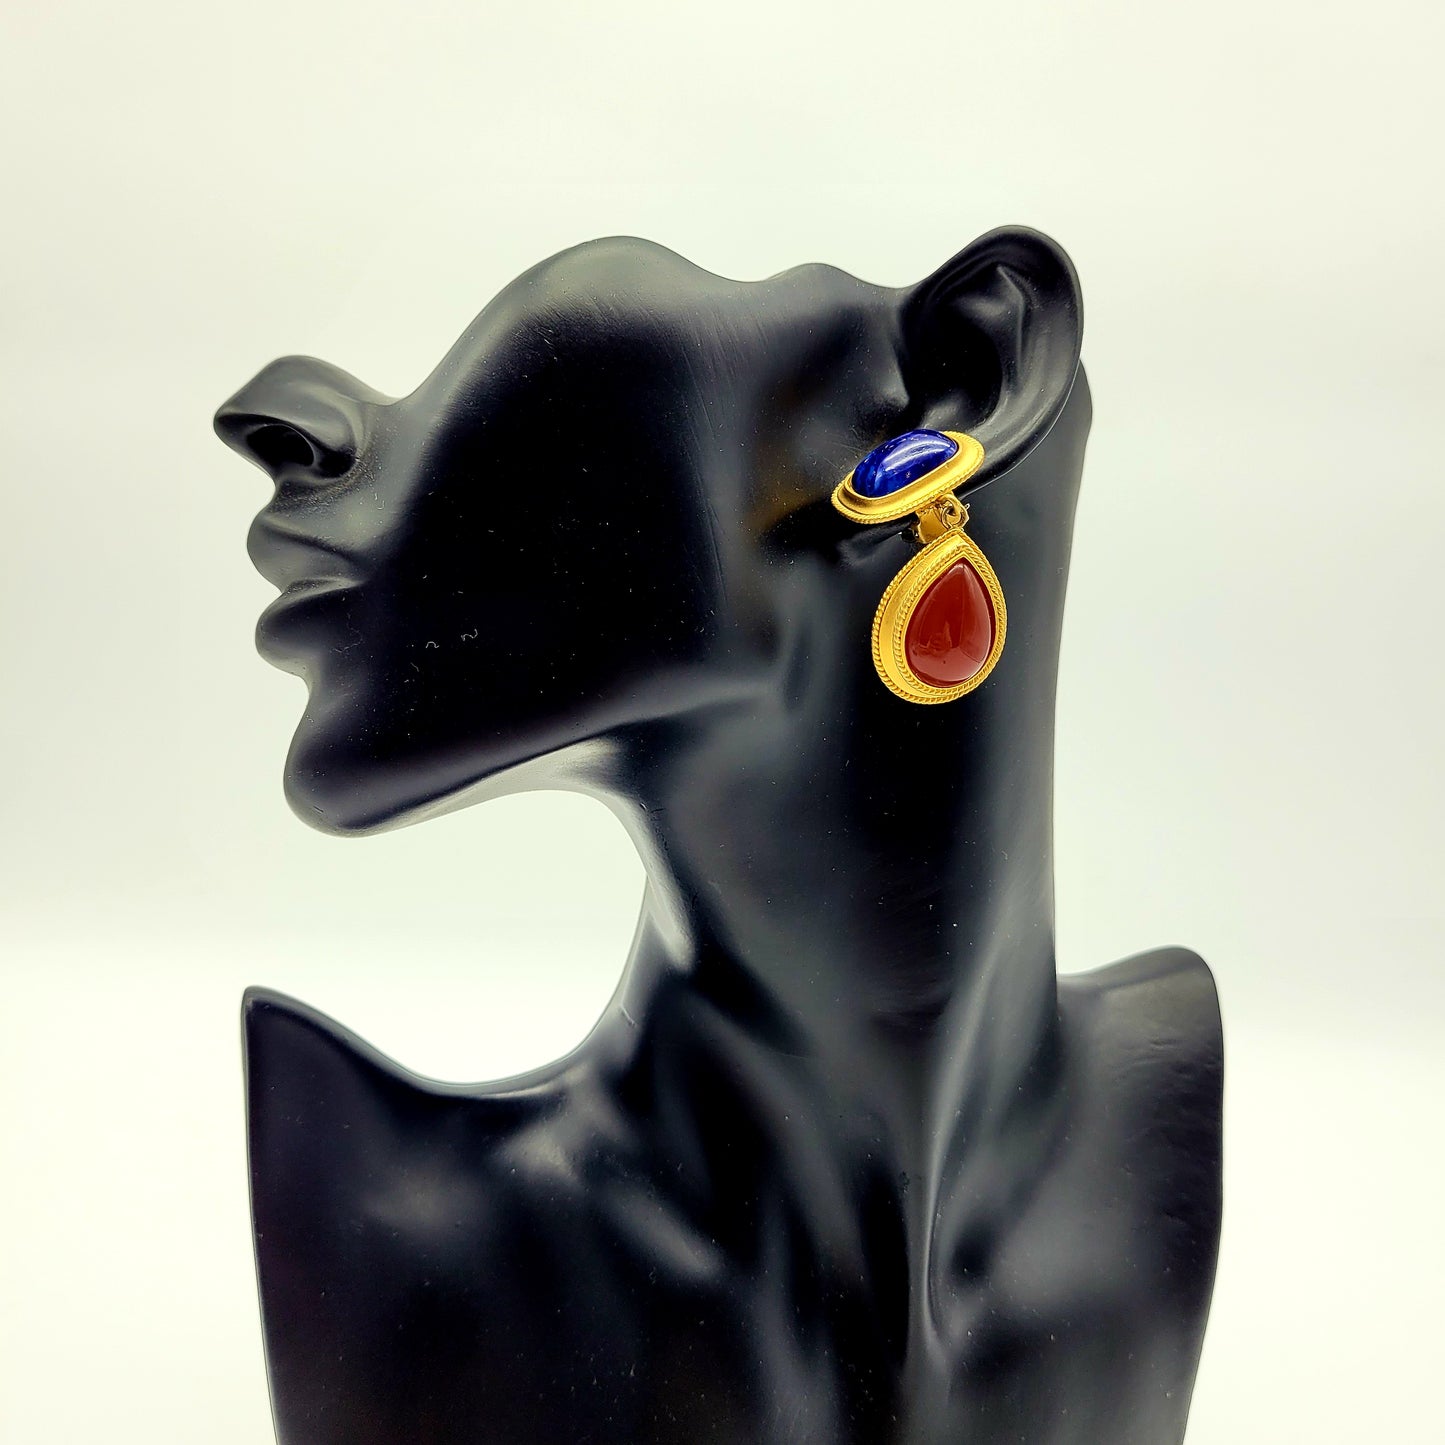 Vintage dangle earrings